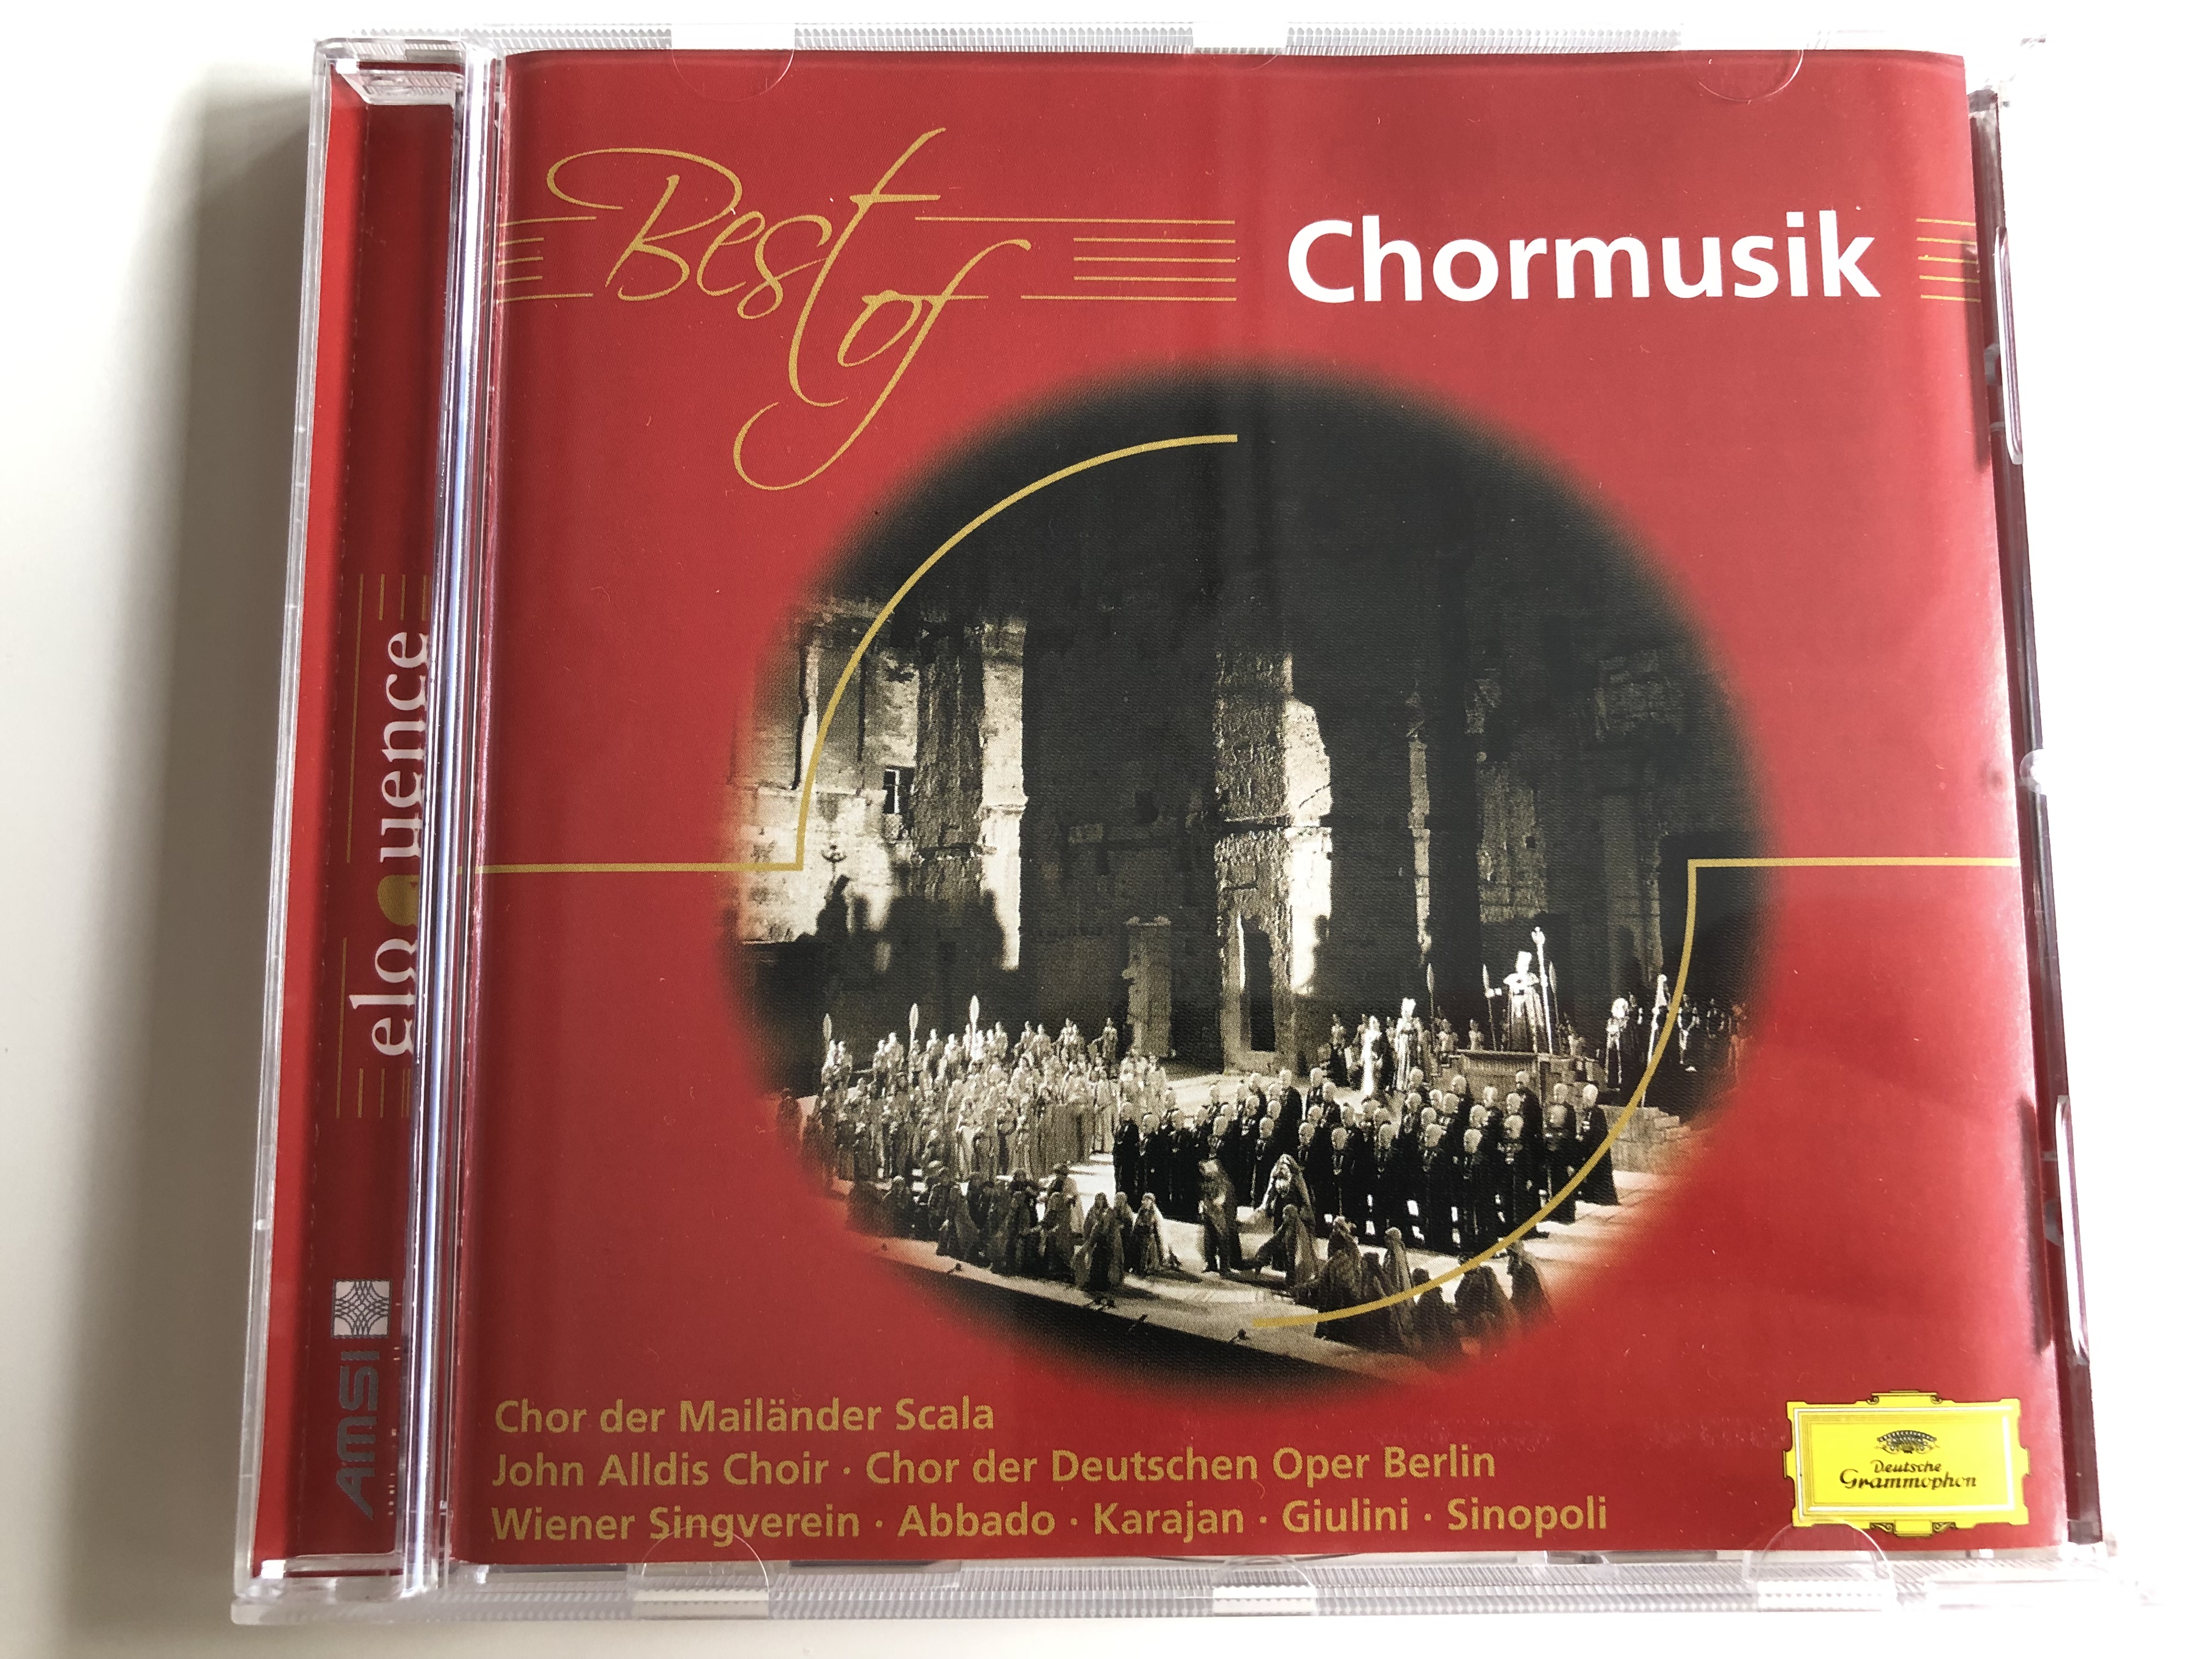 best-of-chormusik-audio-cd-chor-der-mail-nder-scala-john-alldis-choir-chor-der-deutschen-oper-berlin-wiener-singverein-abbado-karajan-giulini-sinopoli-eloquence-amsi-1-.jpg